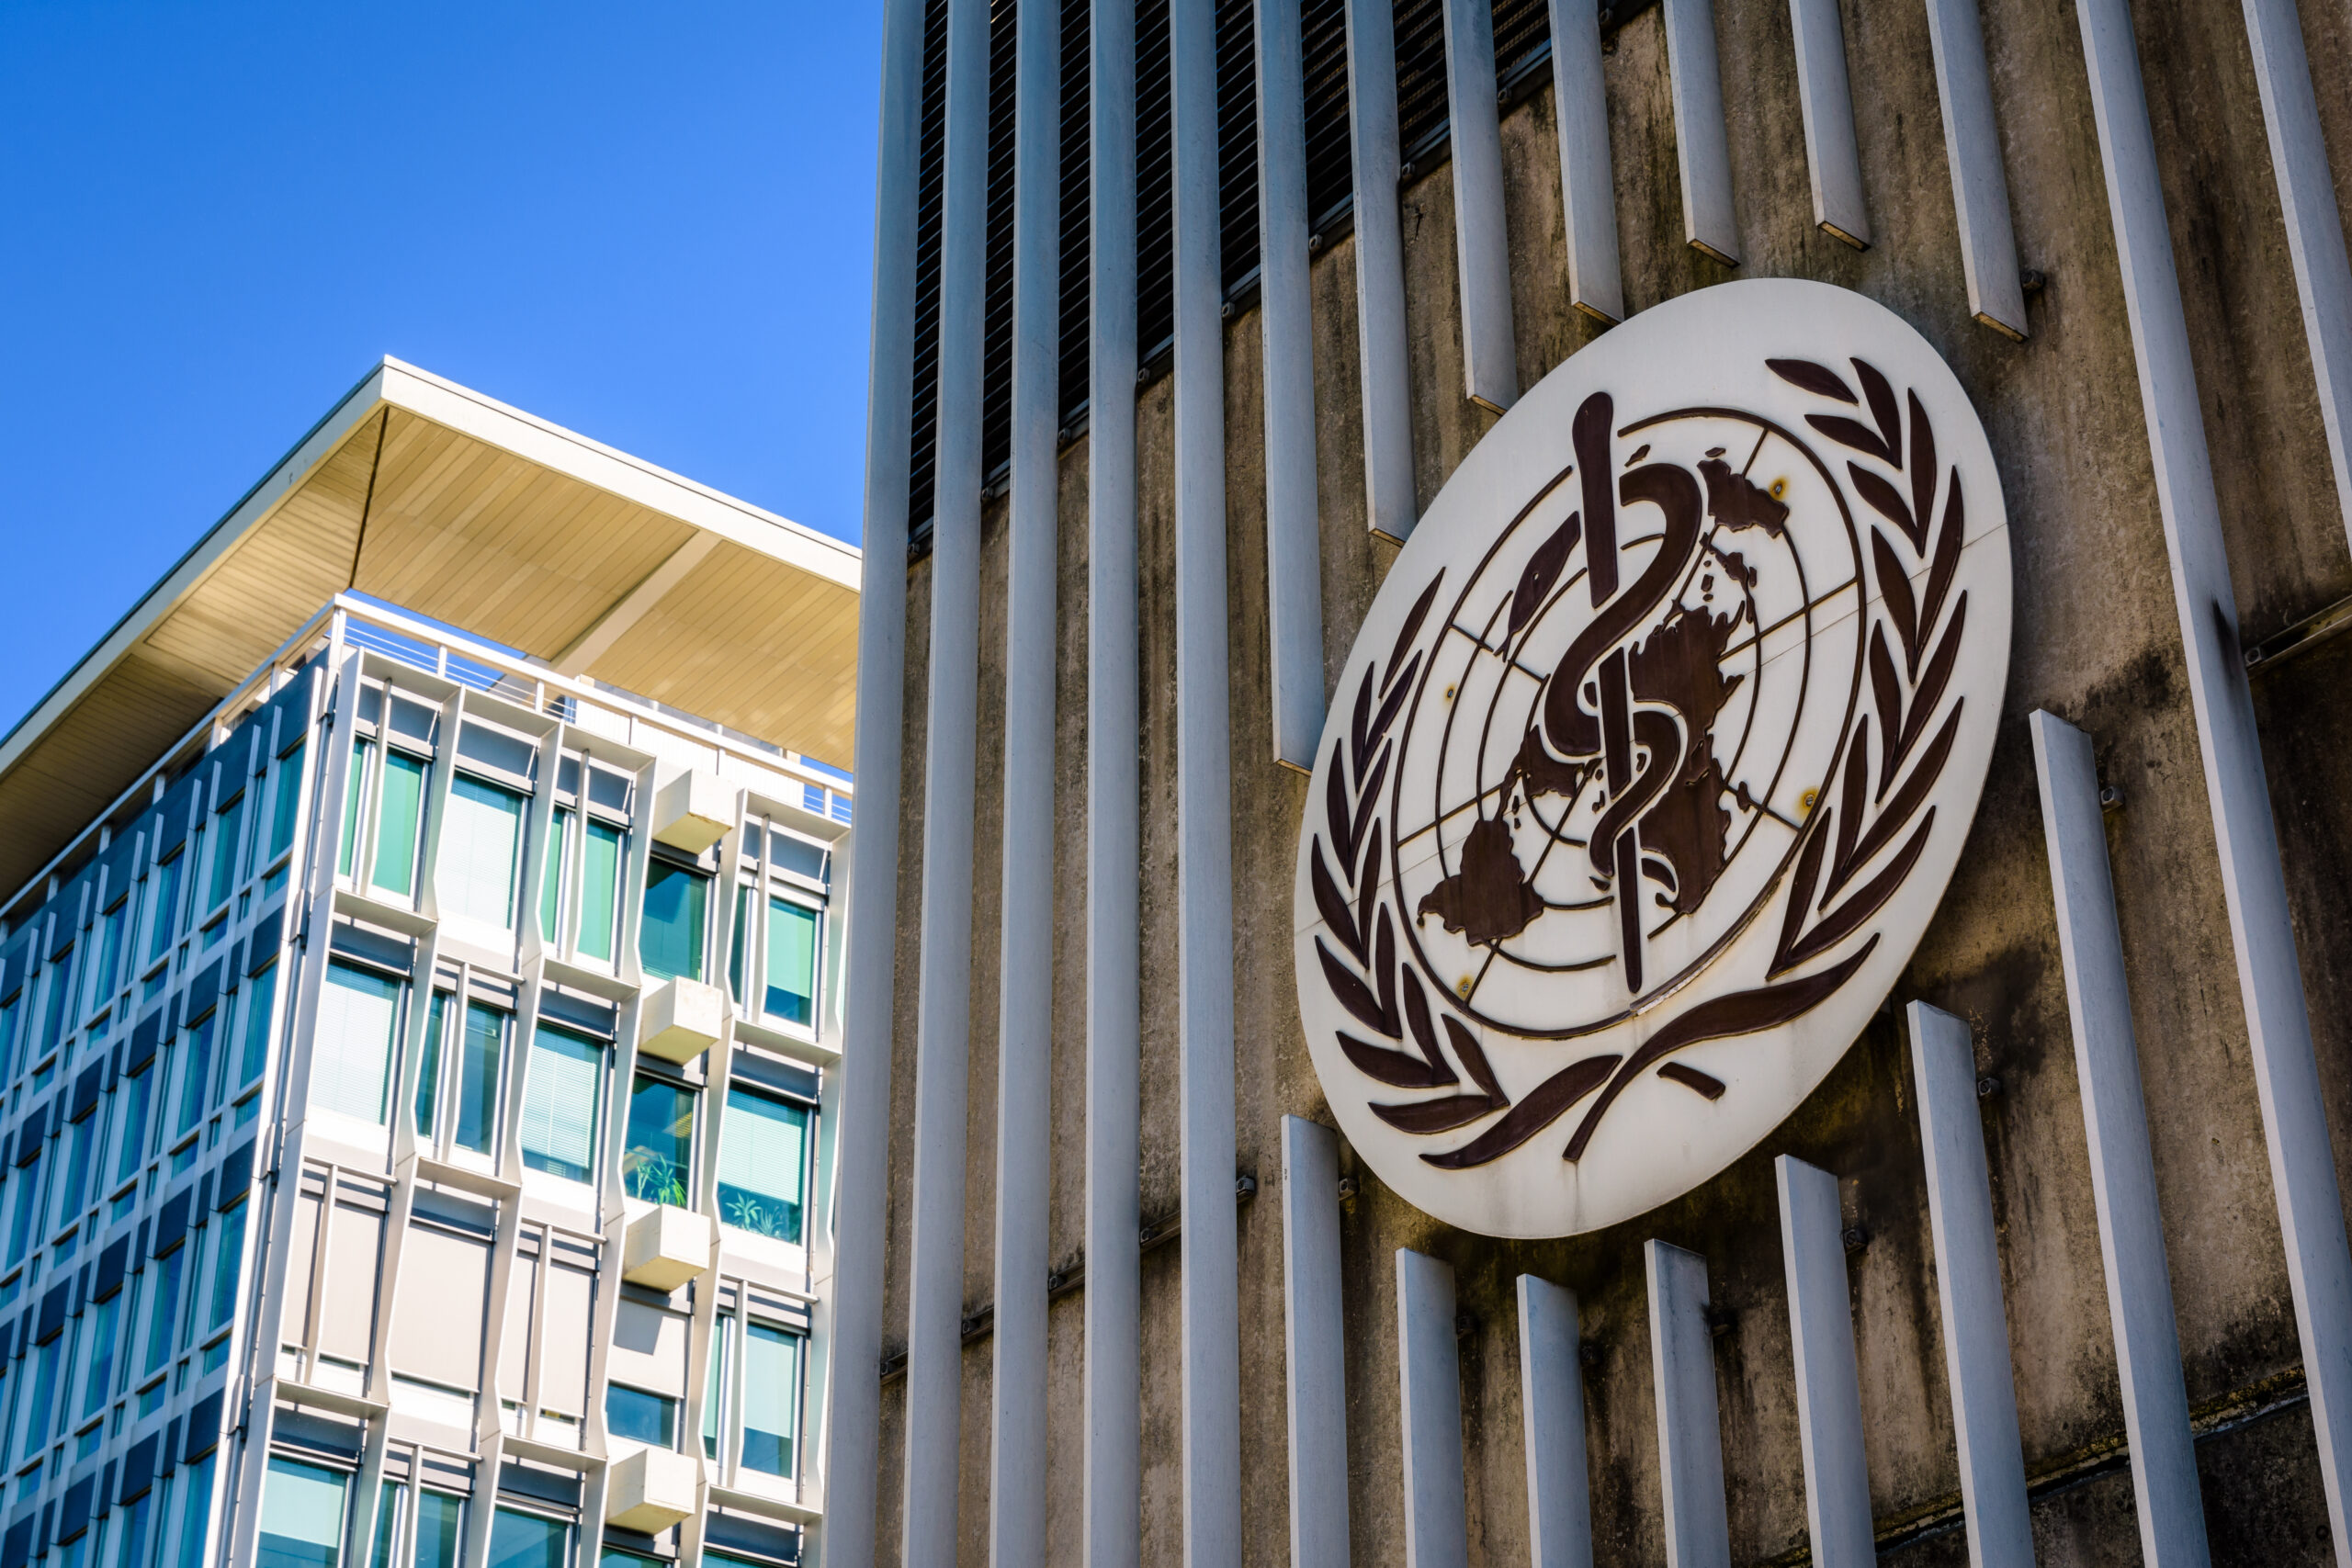 The World Health Organization (WHO) headquarters in Geneva, Switzerland.